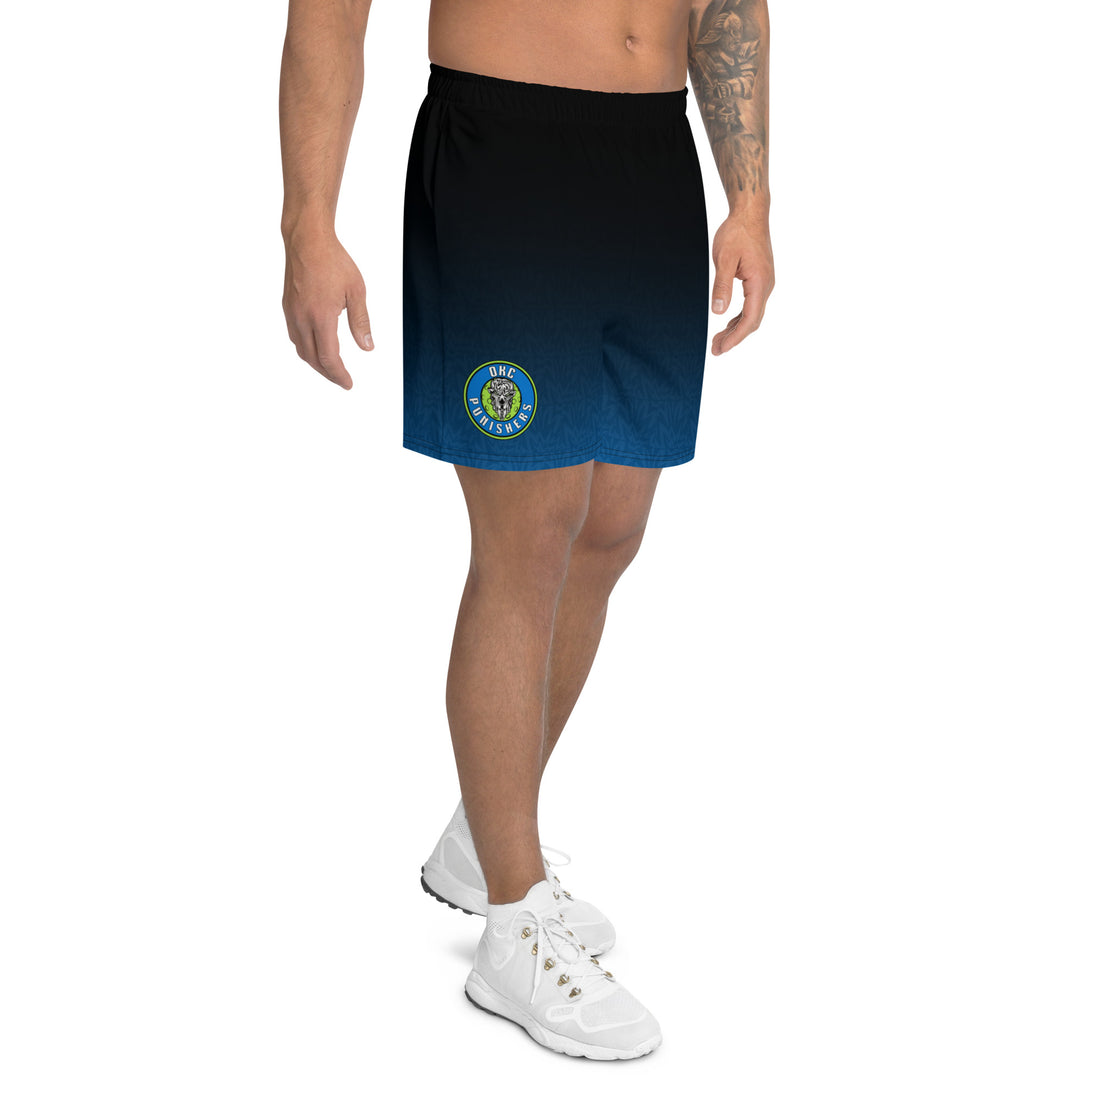 OKC Punishers™ SKYblue™ 2023 Replica Men's Shorts, Black - Turquois Ombre